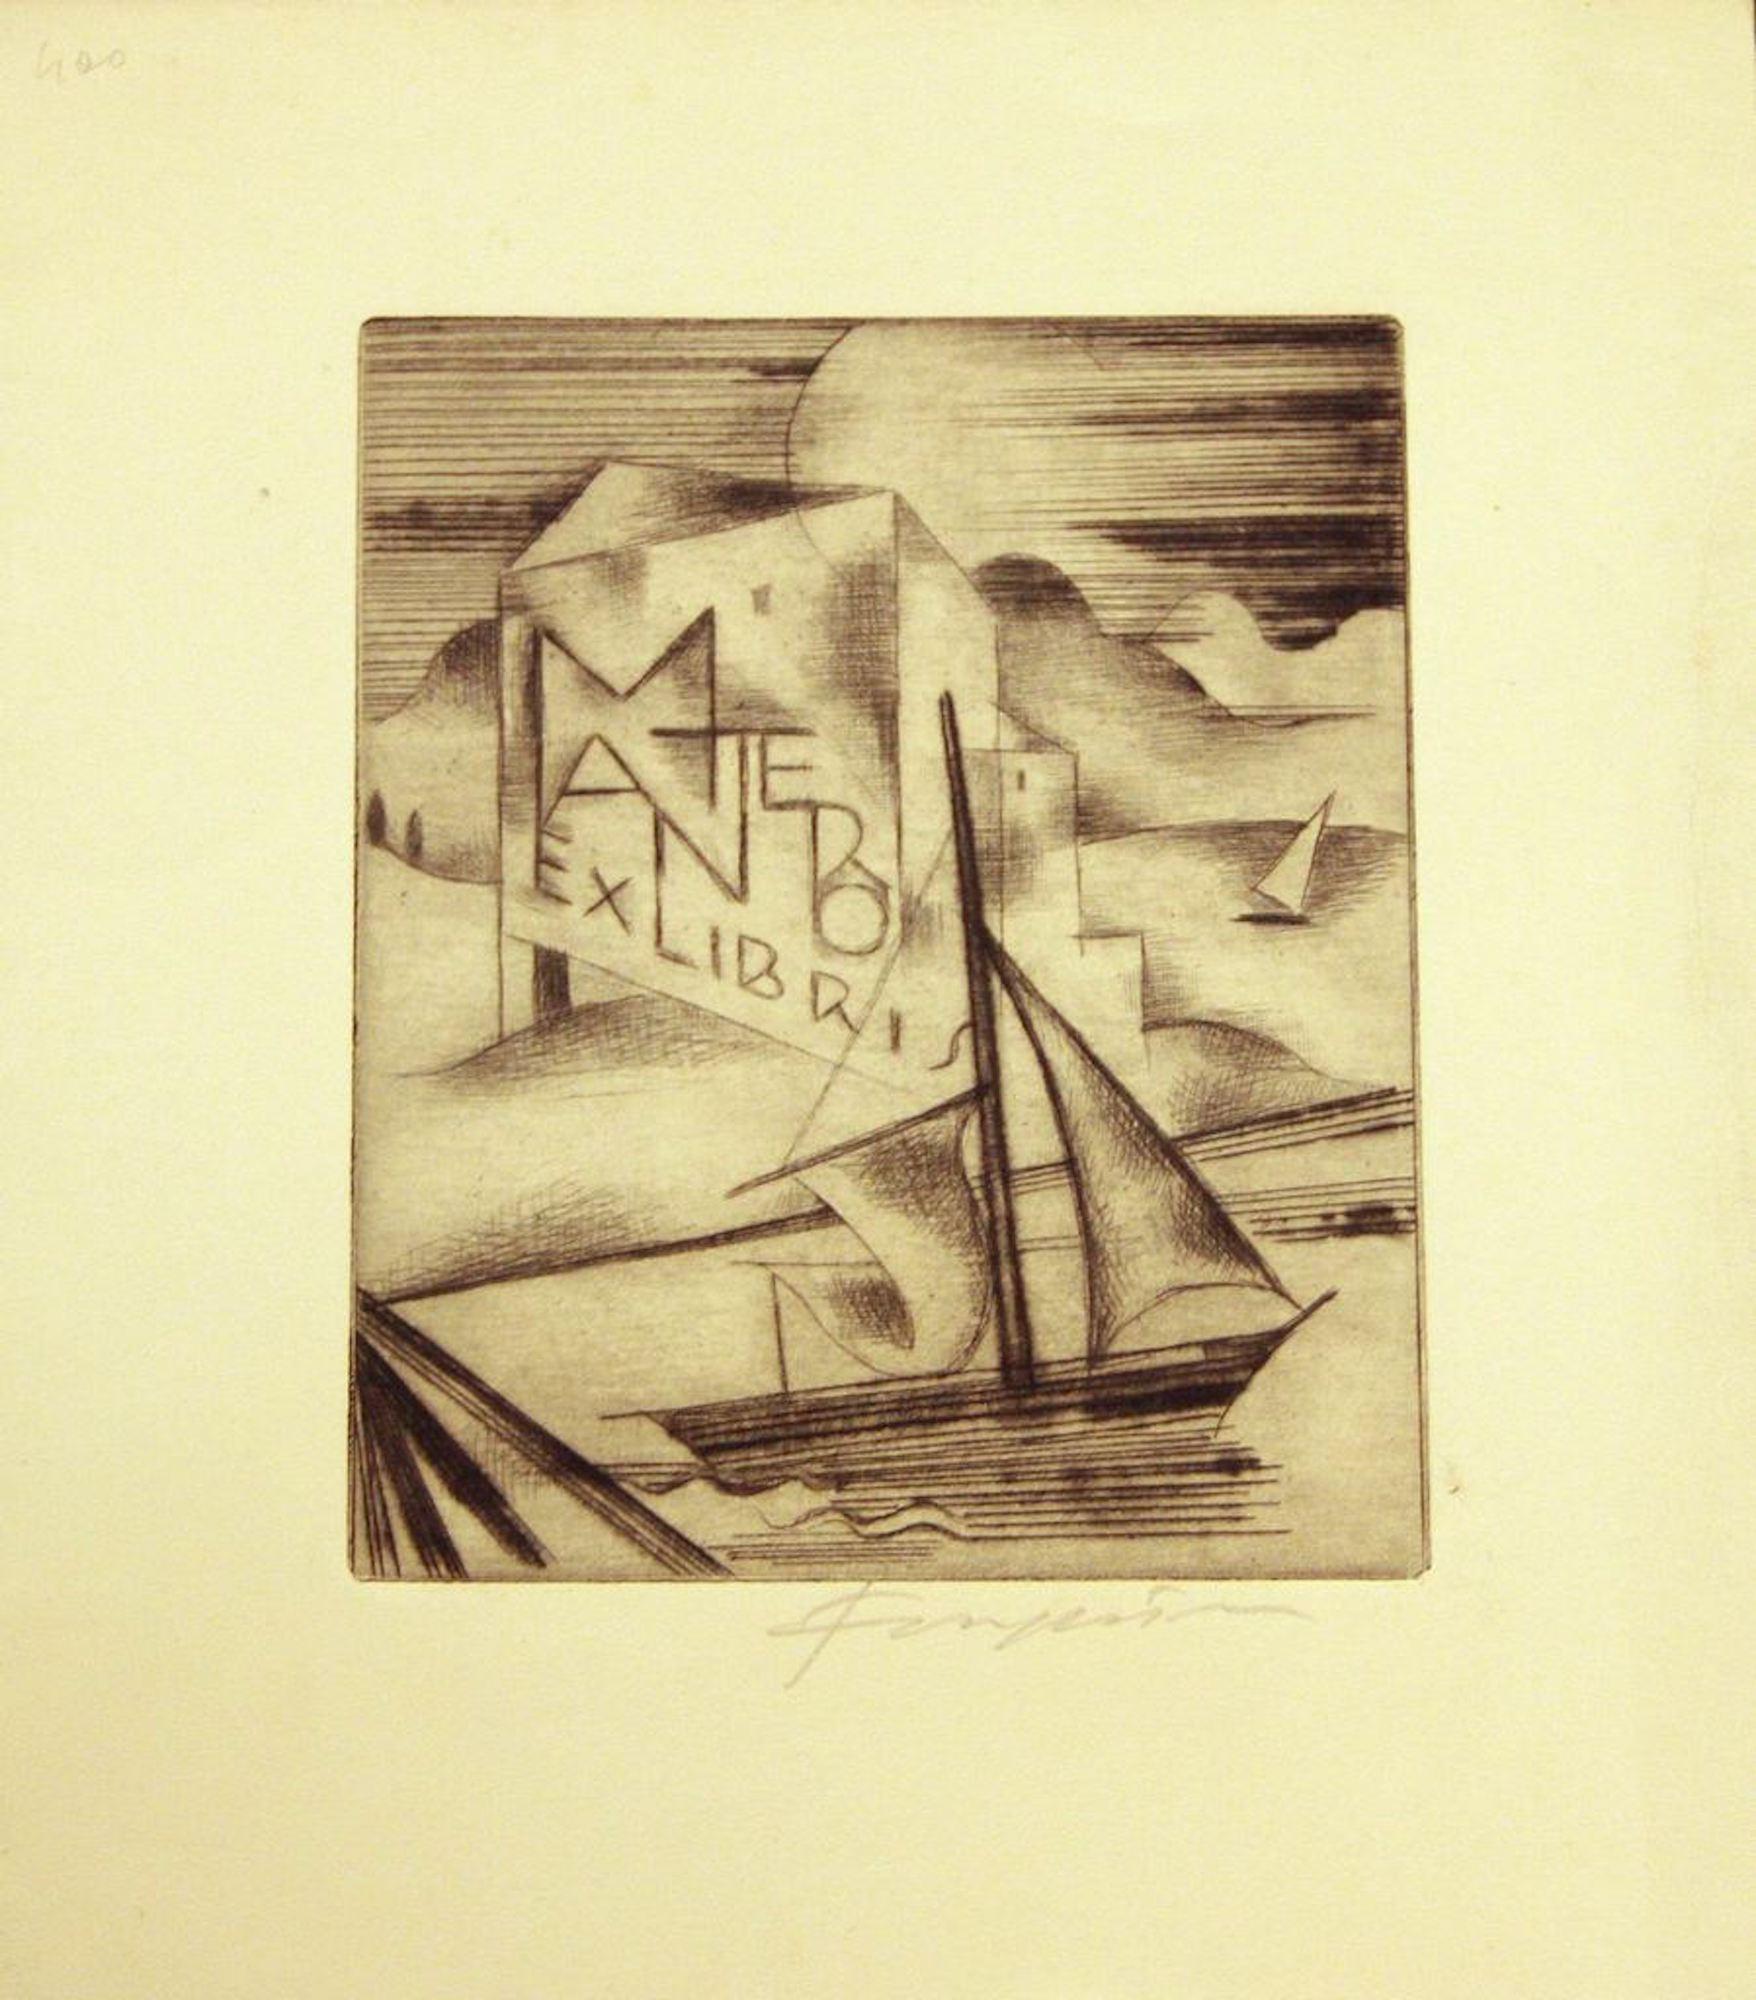 Michel Fingesten Figurative Print - Ex Libris Mantero - Original Etching by M. Fingesten - Early 1900